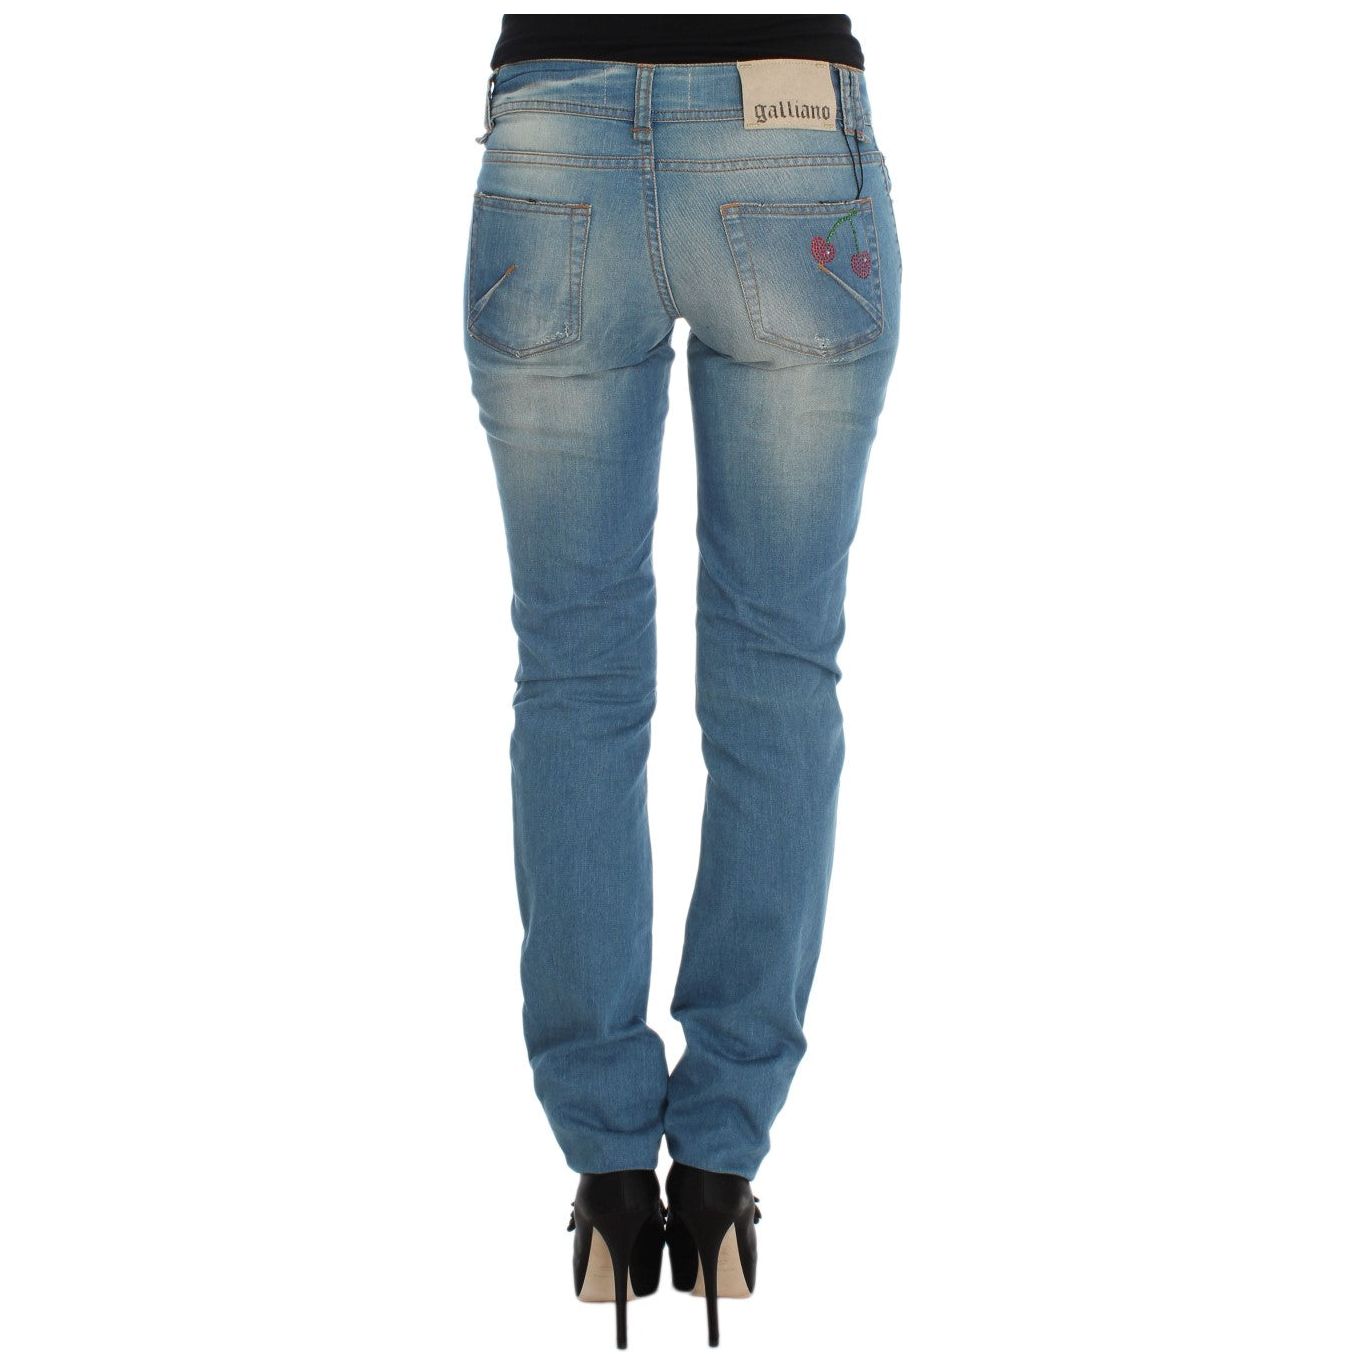 John Galliano Sleek Blue Slim Fit Designer Jeans blue-wash-cotton-blend-slim-fit-jeans-1 329905-blue-wash-cotton-blend-slim-fit-jeans-4-2.jpg